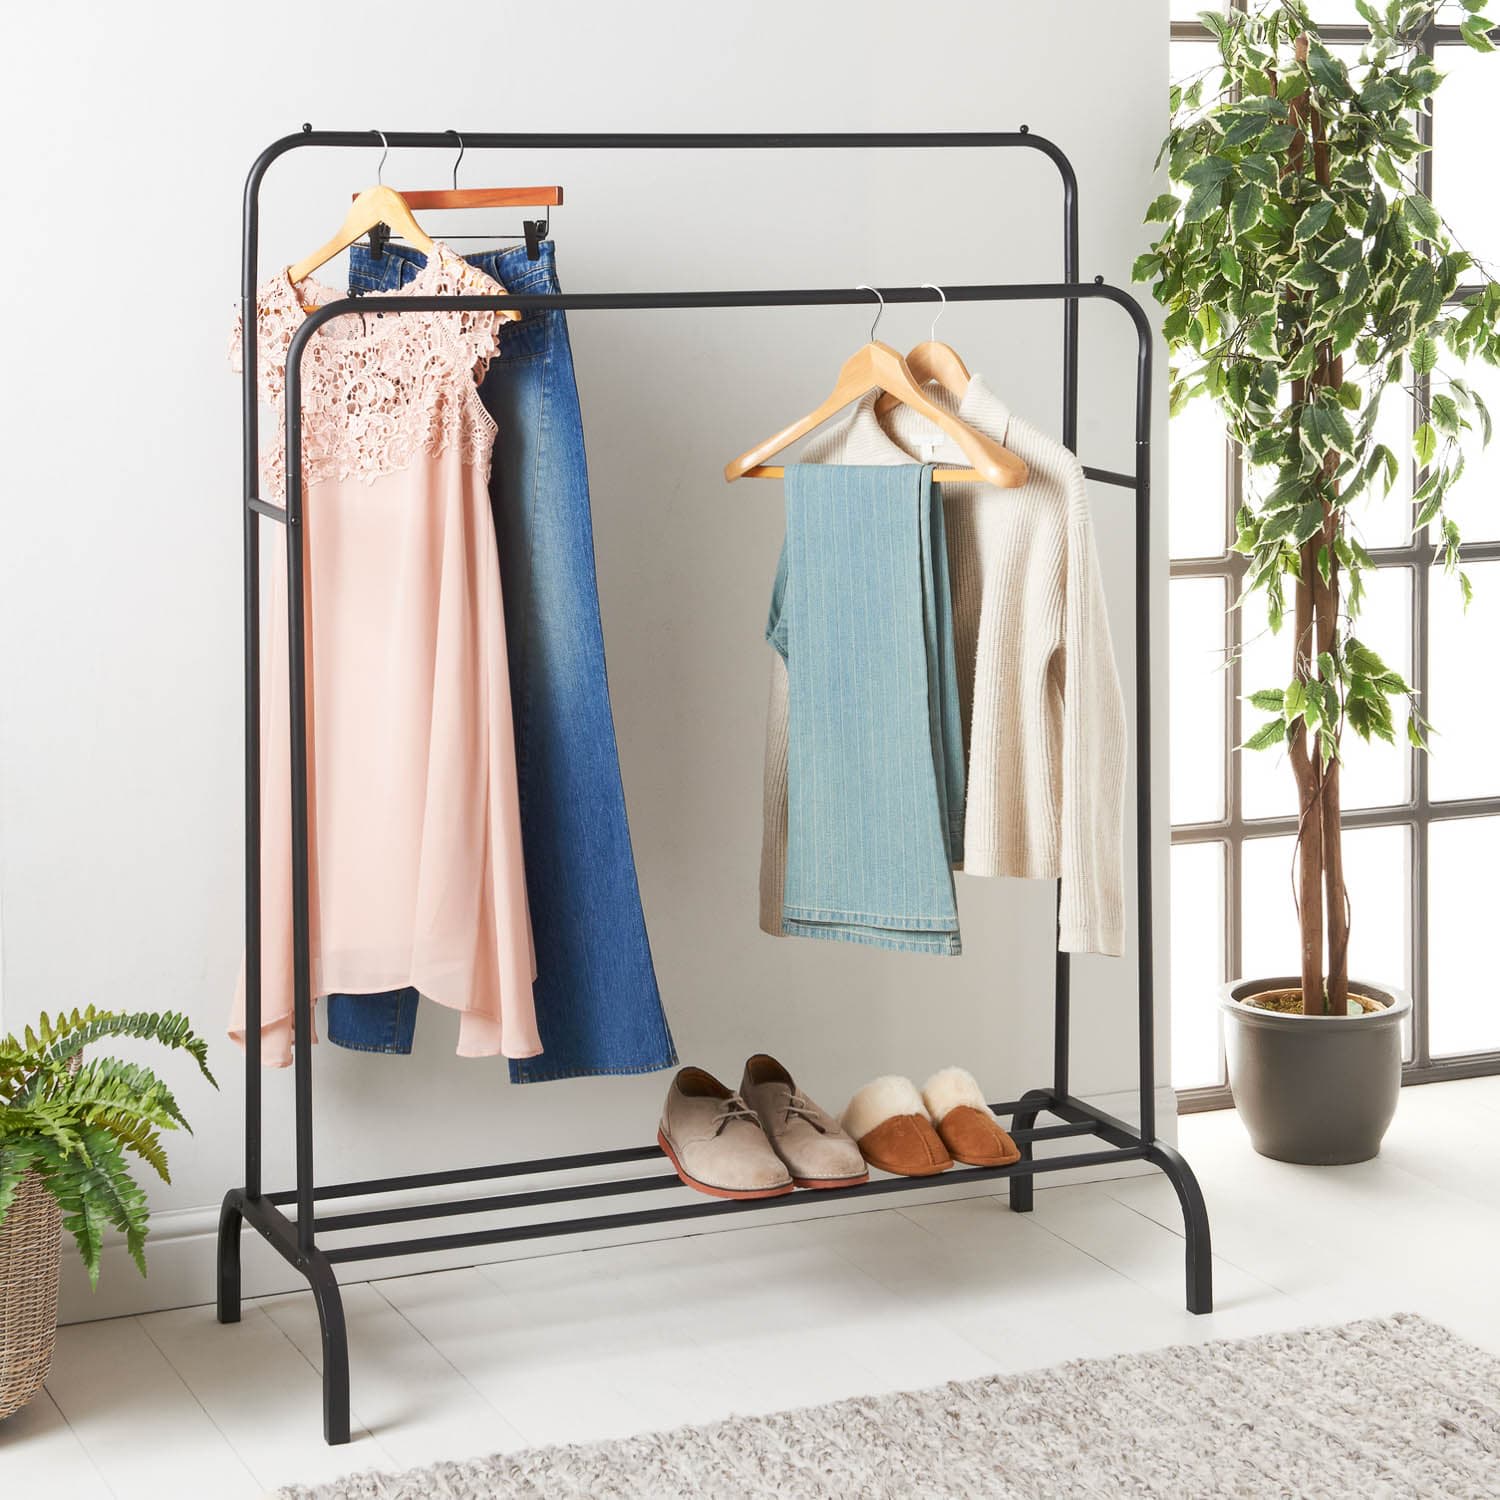 Spaceways Double Garment Rail with Rack | Storage & Shelving - B&M Stores